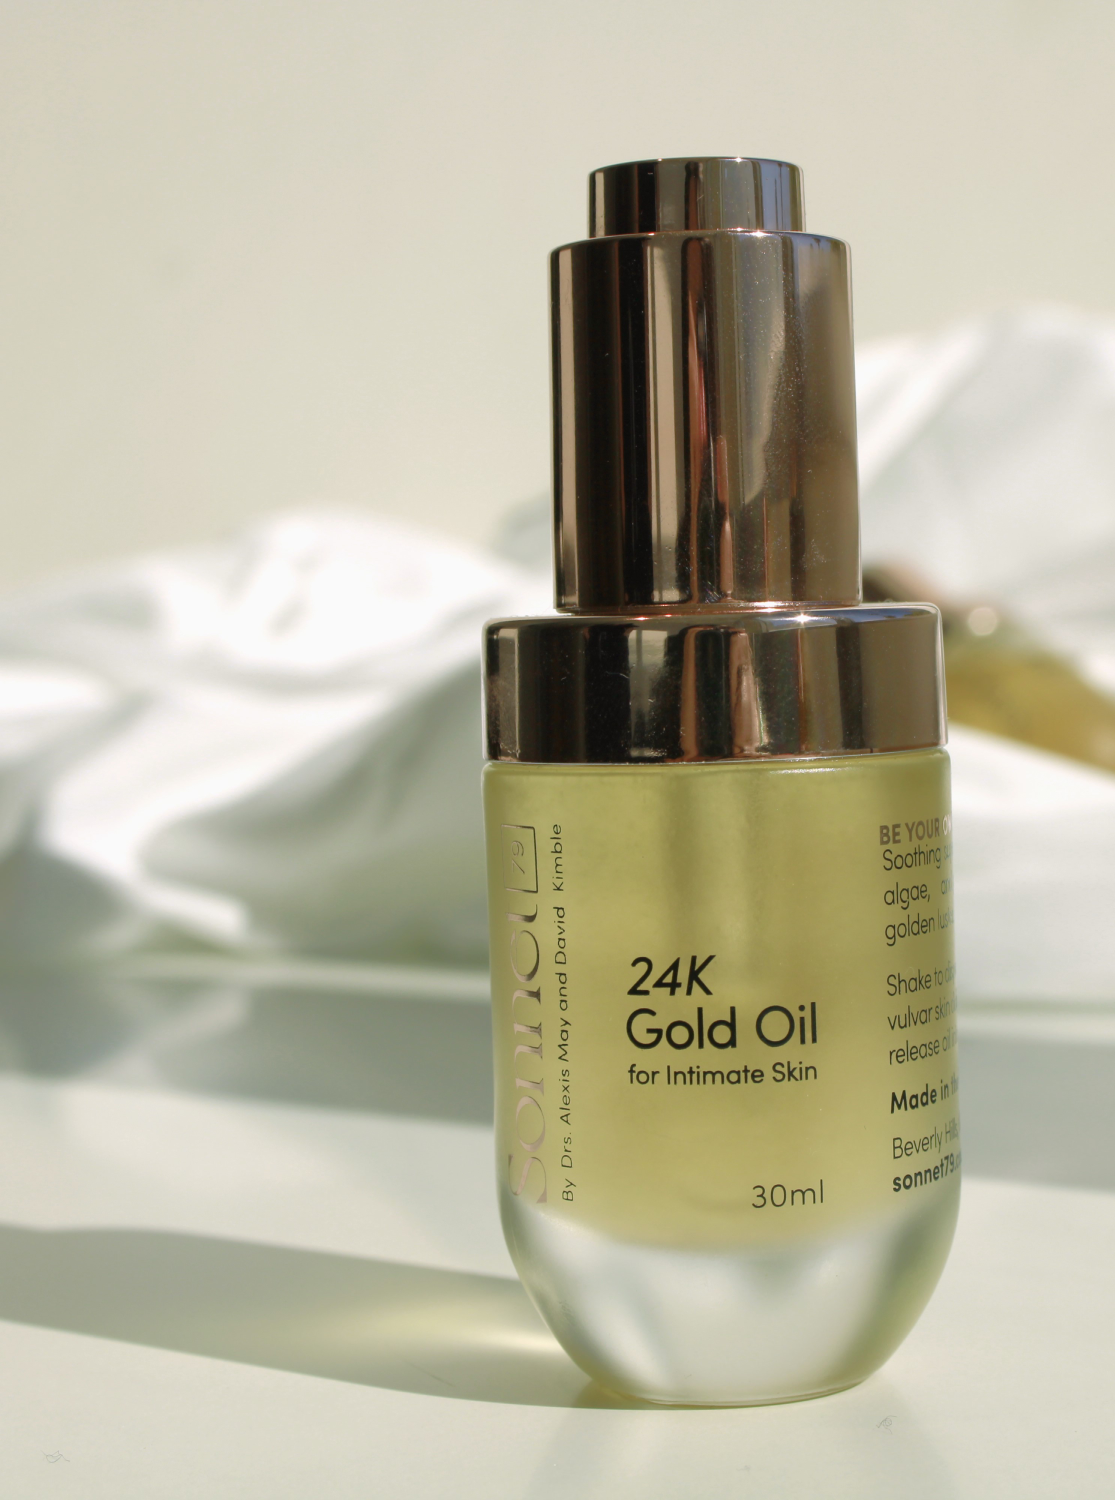 24K Gold Oil for Intimate Skin